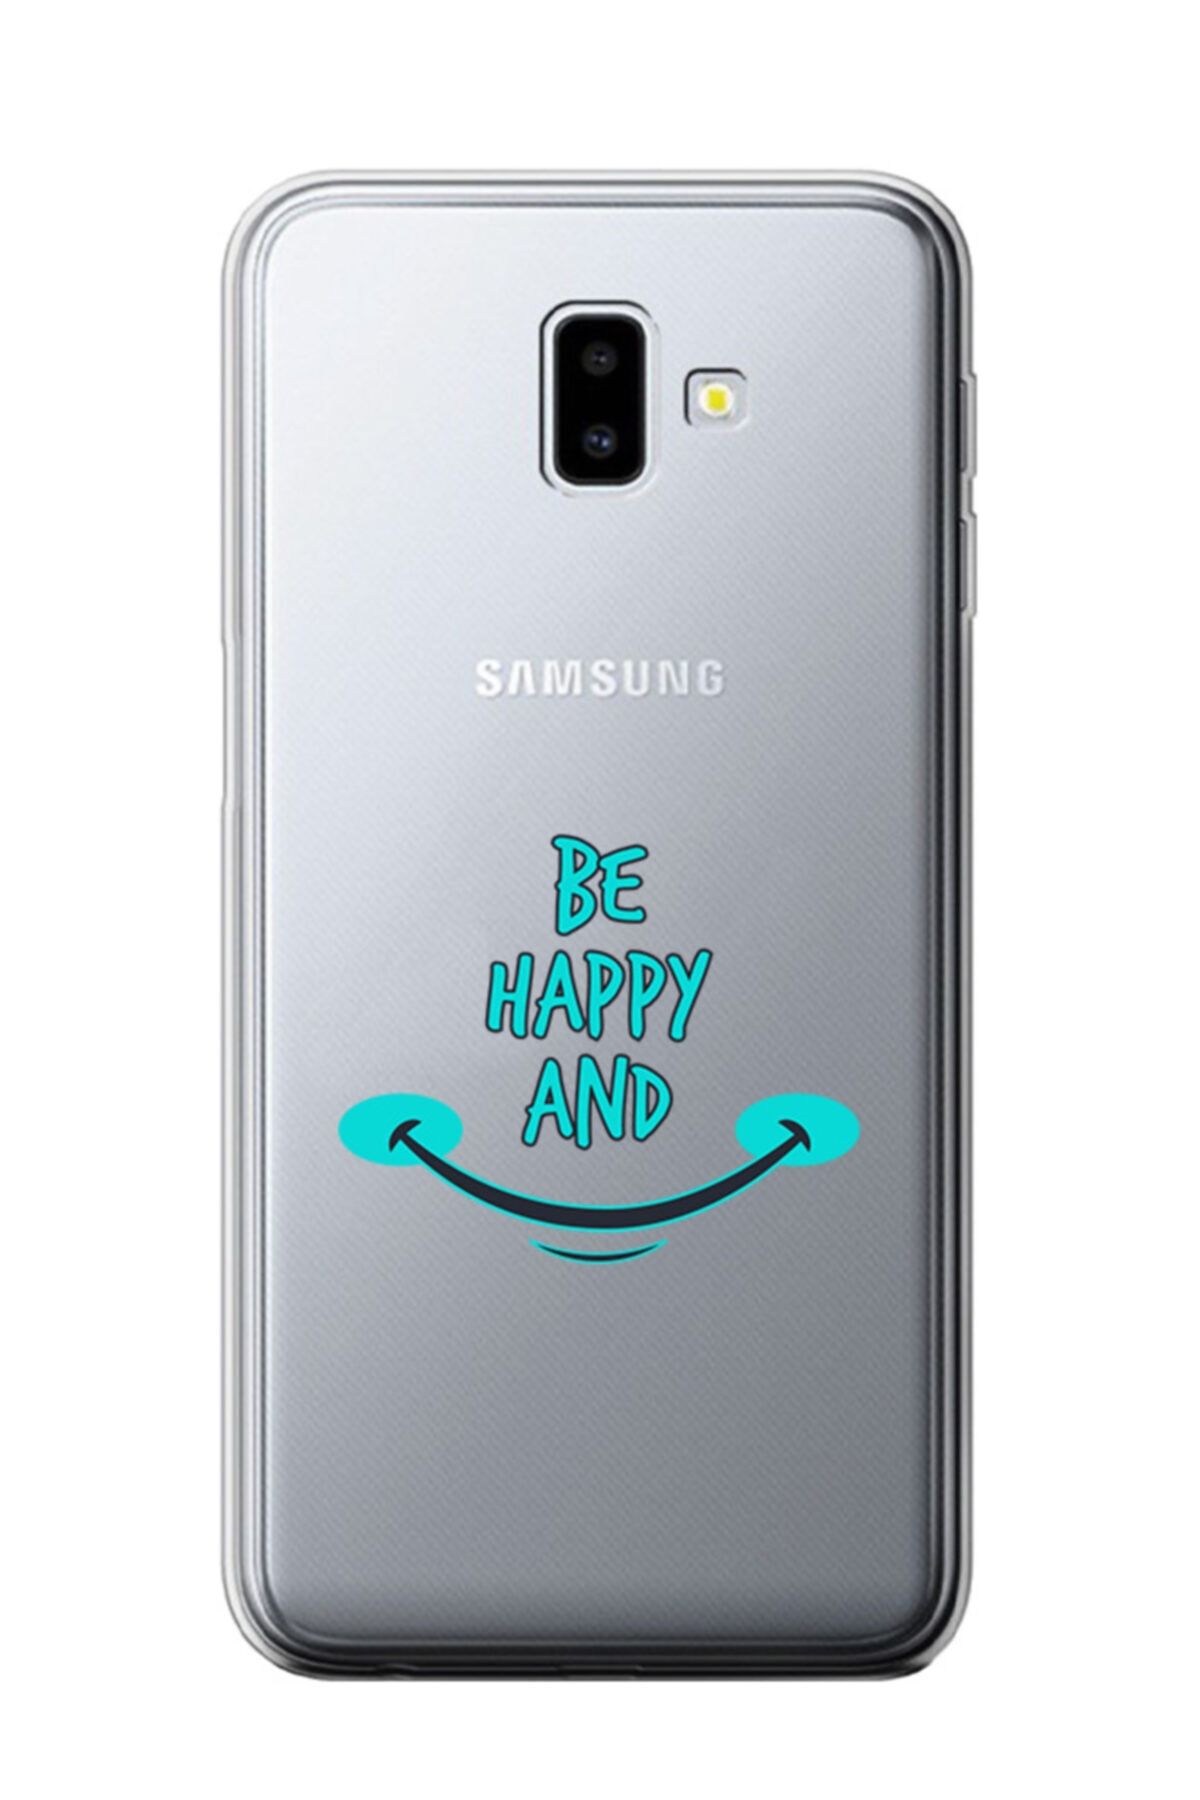 Dafhi Aksesuar Dafhi Samsung Galaxy J6 Plus Be Happy And Telefon Kılıfı